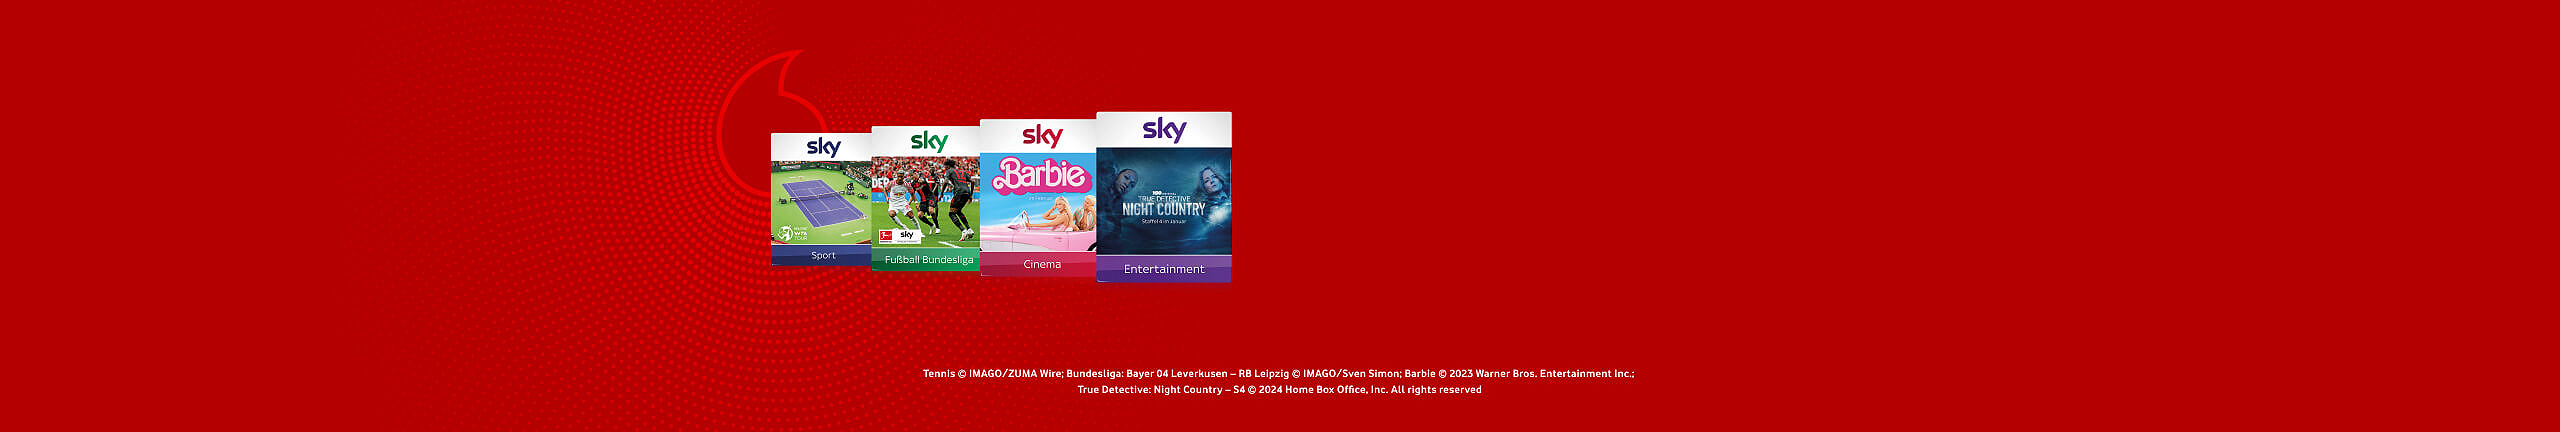 Sky Pakete bei Vodafone: Sky Cinema Paket, Sky Fußball-Bundesliga Paket, Sky Sport Paket, Sky Kids Paket